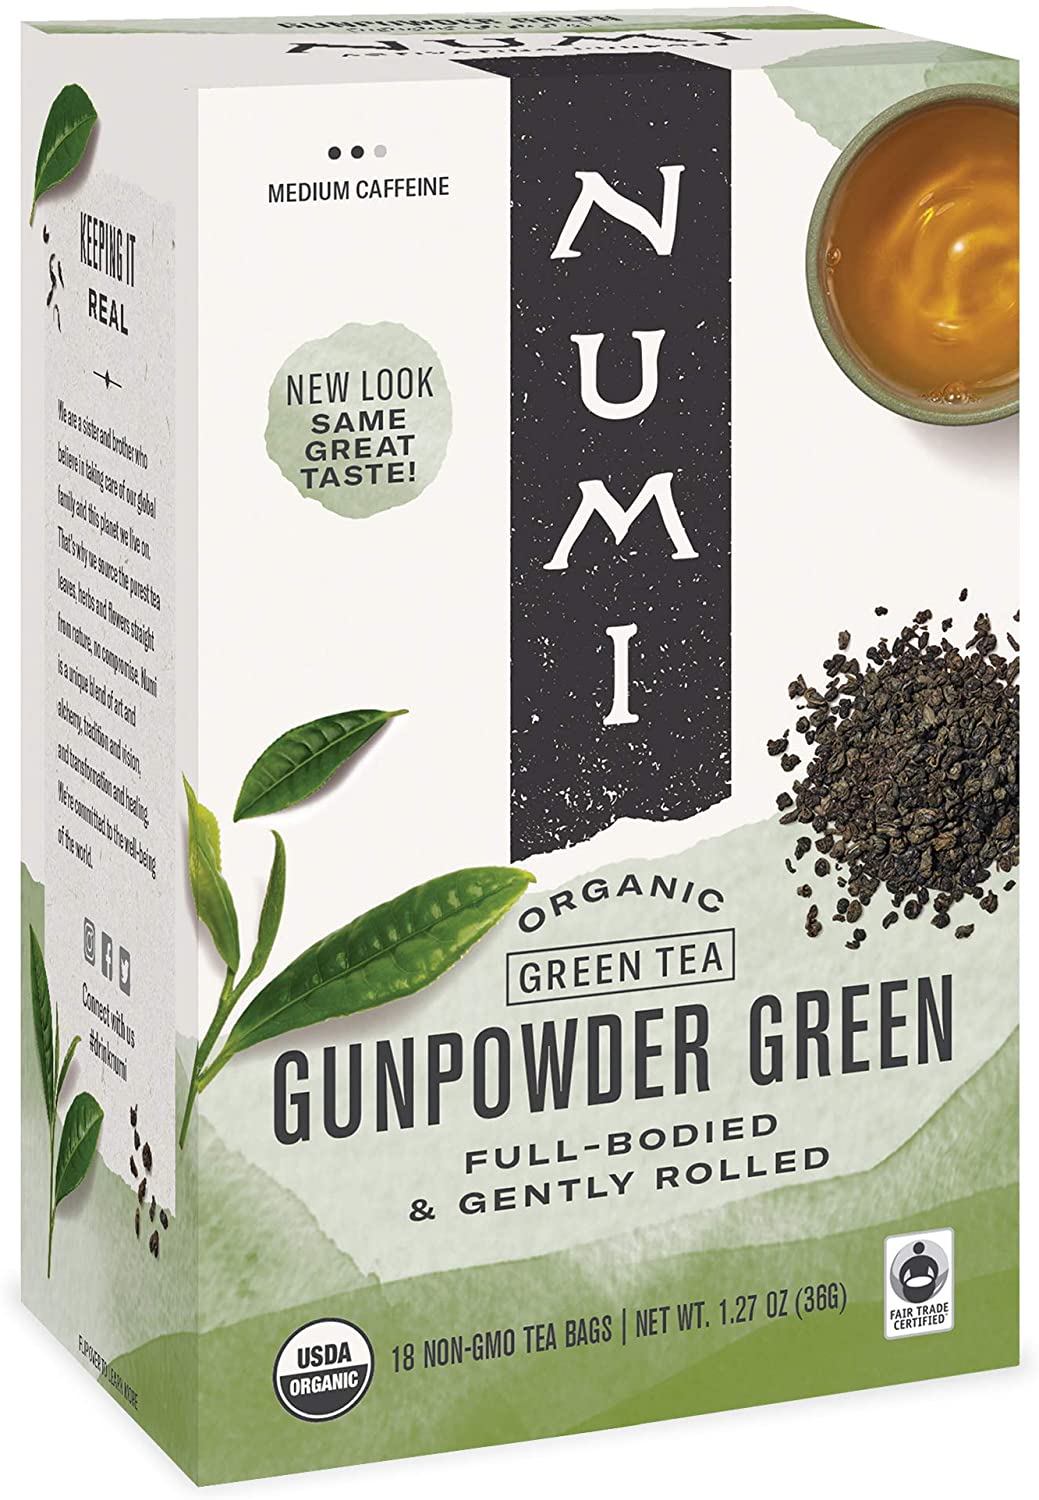 Numi Tea Gunpowder Green
6x18ea